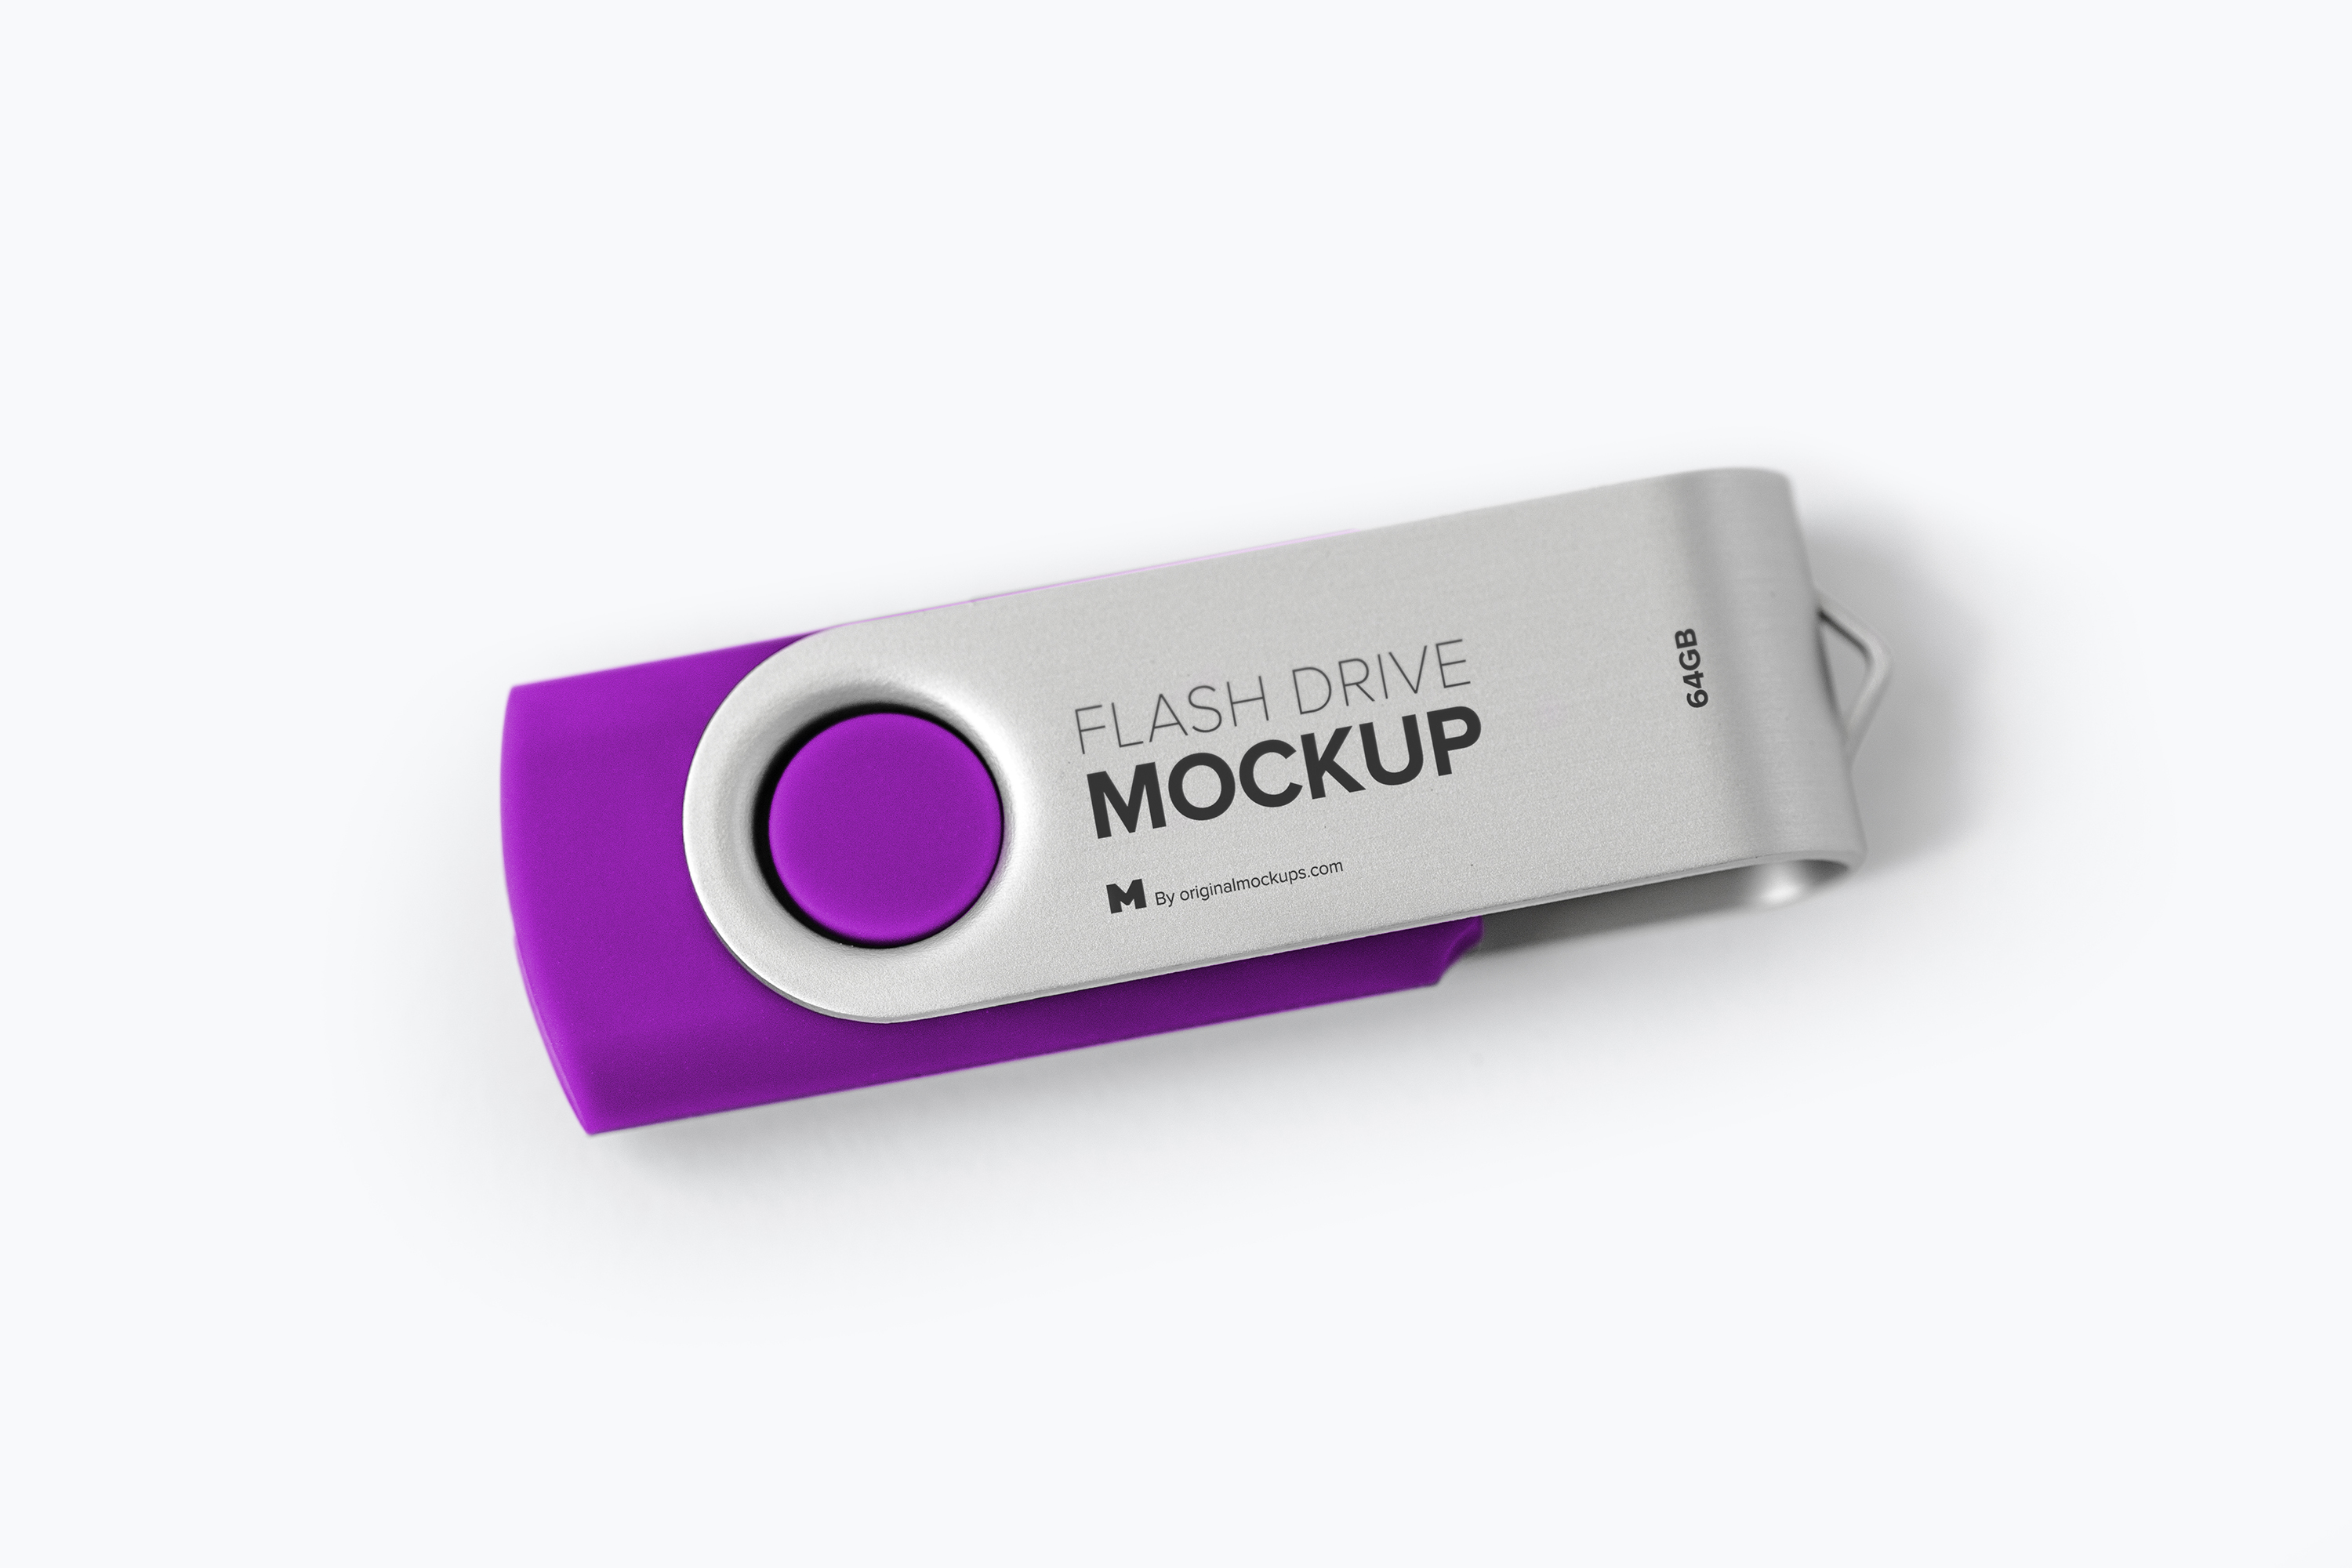 创意U盘外观设计效果图样机模板01 USB Flash Drive Mockup 01插图